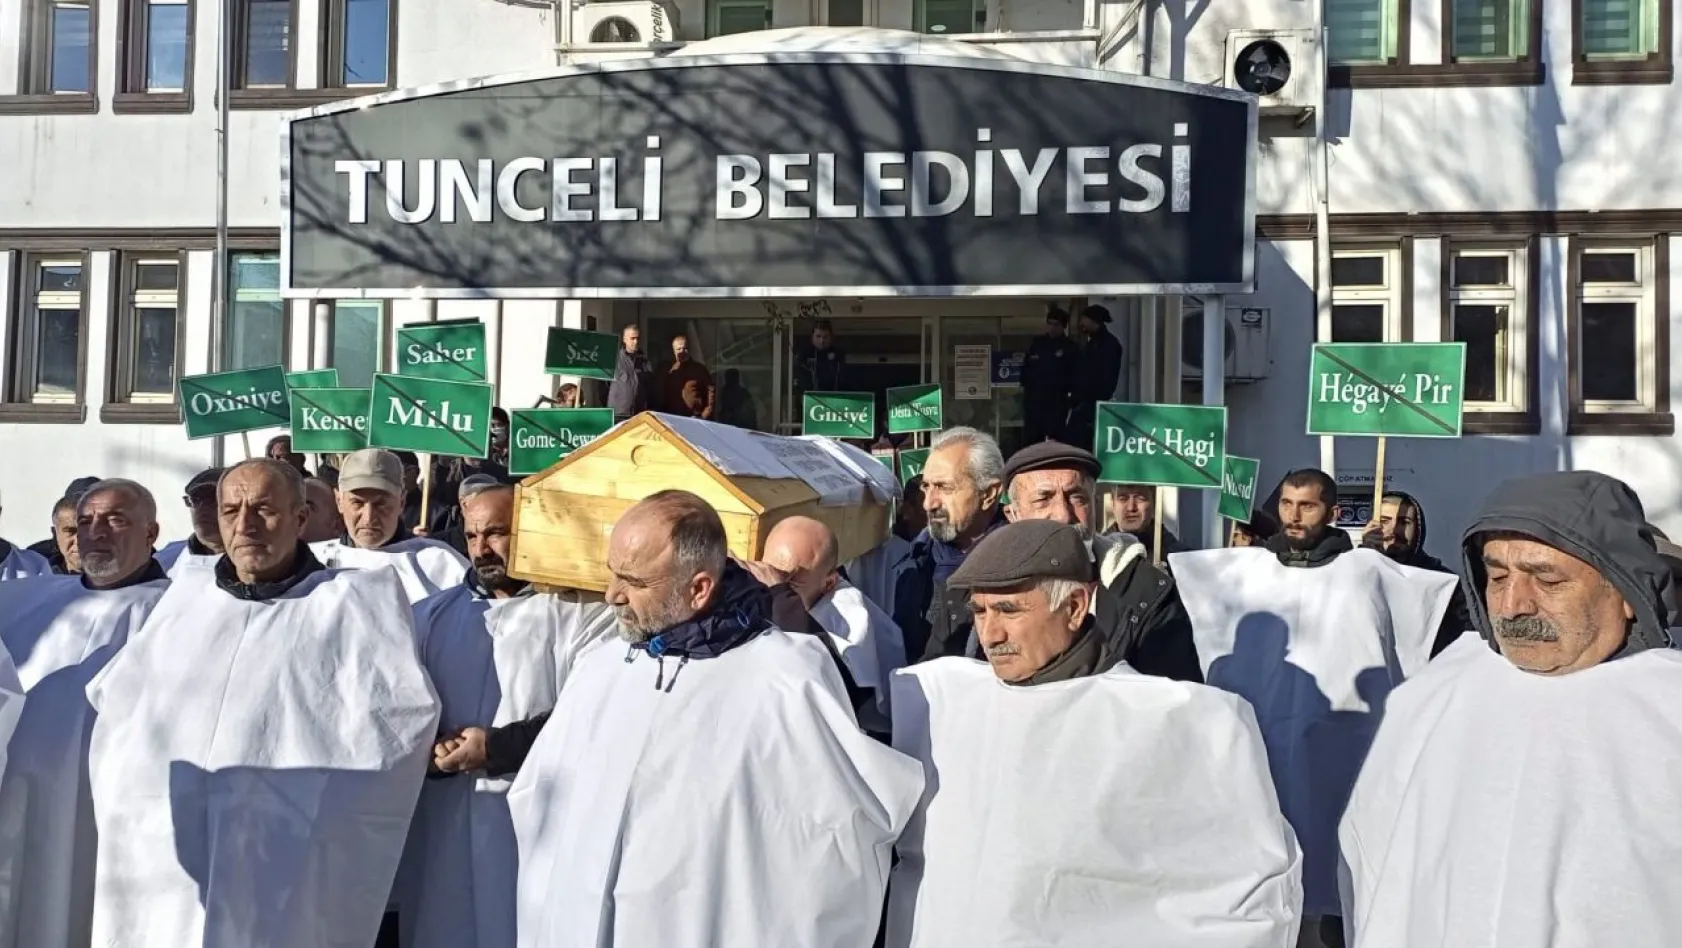 Tunceli'de protesto sesleri yükseldi